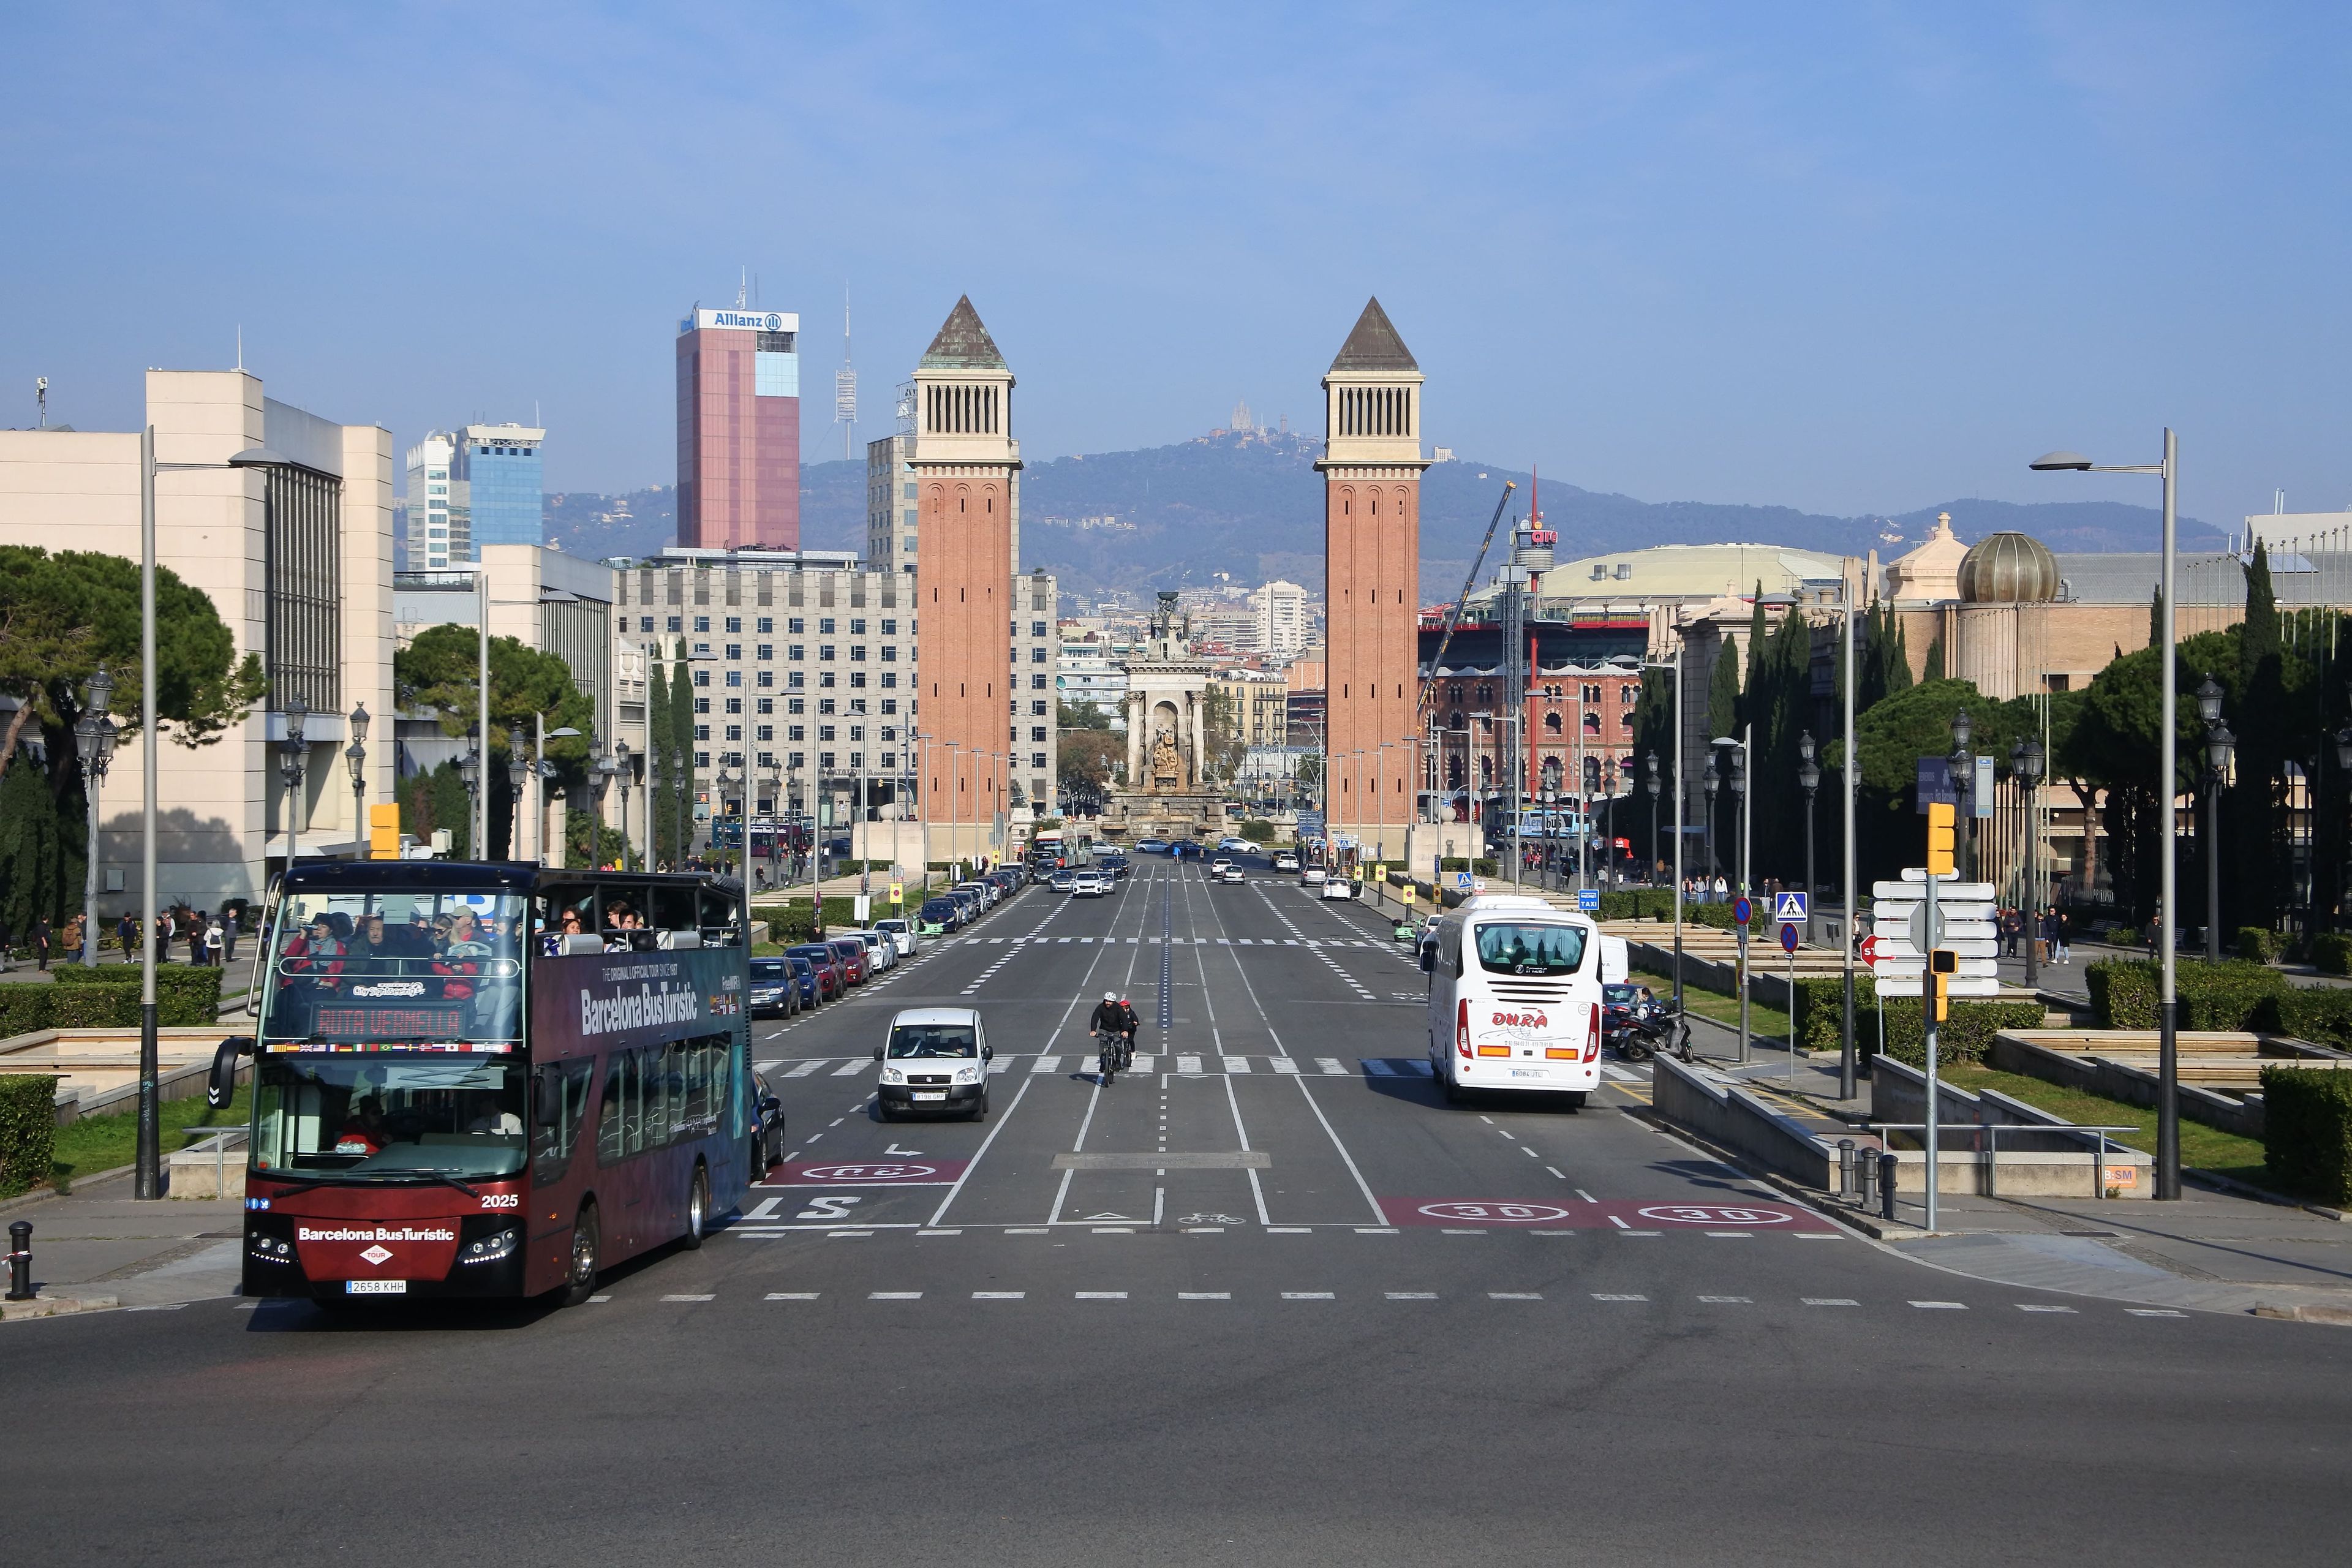 Salir de Barcelona en coche: ya sabemos la fecha